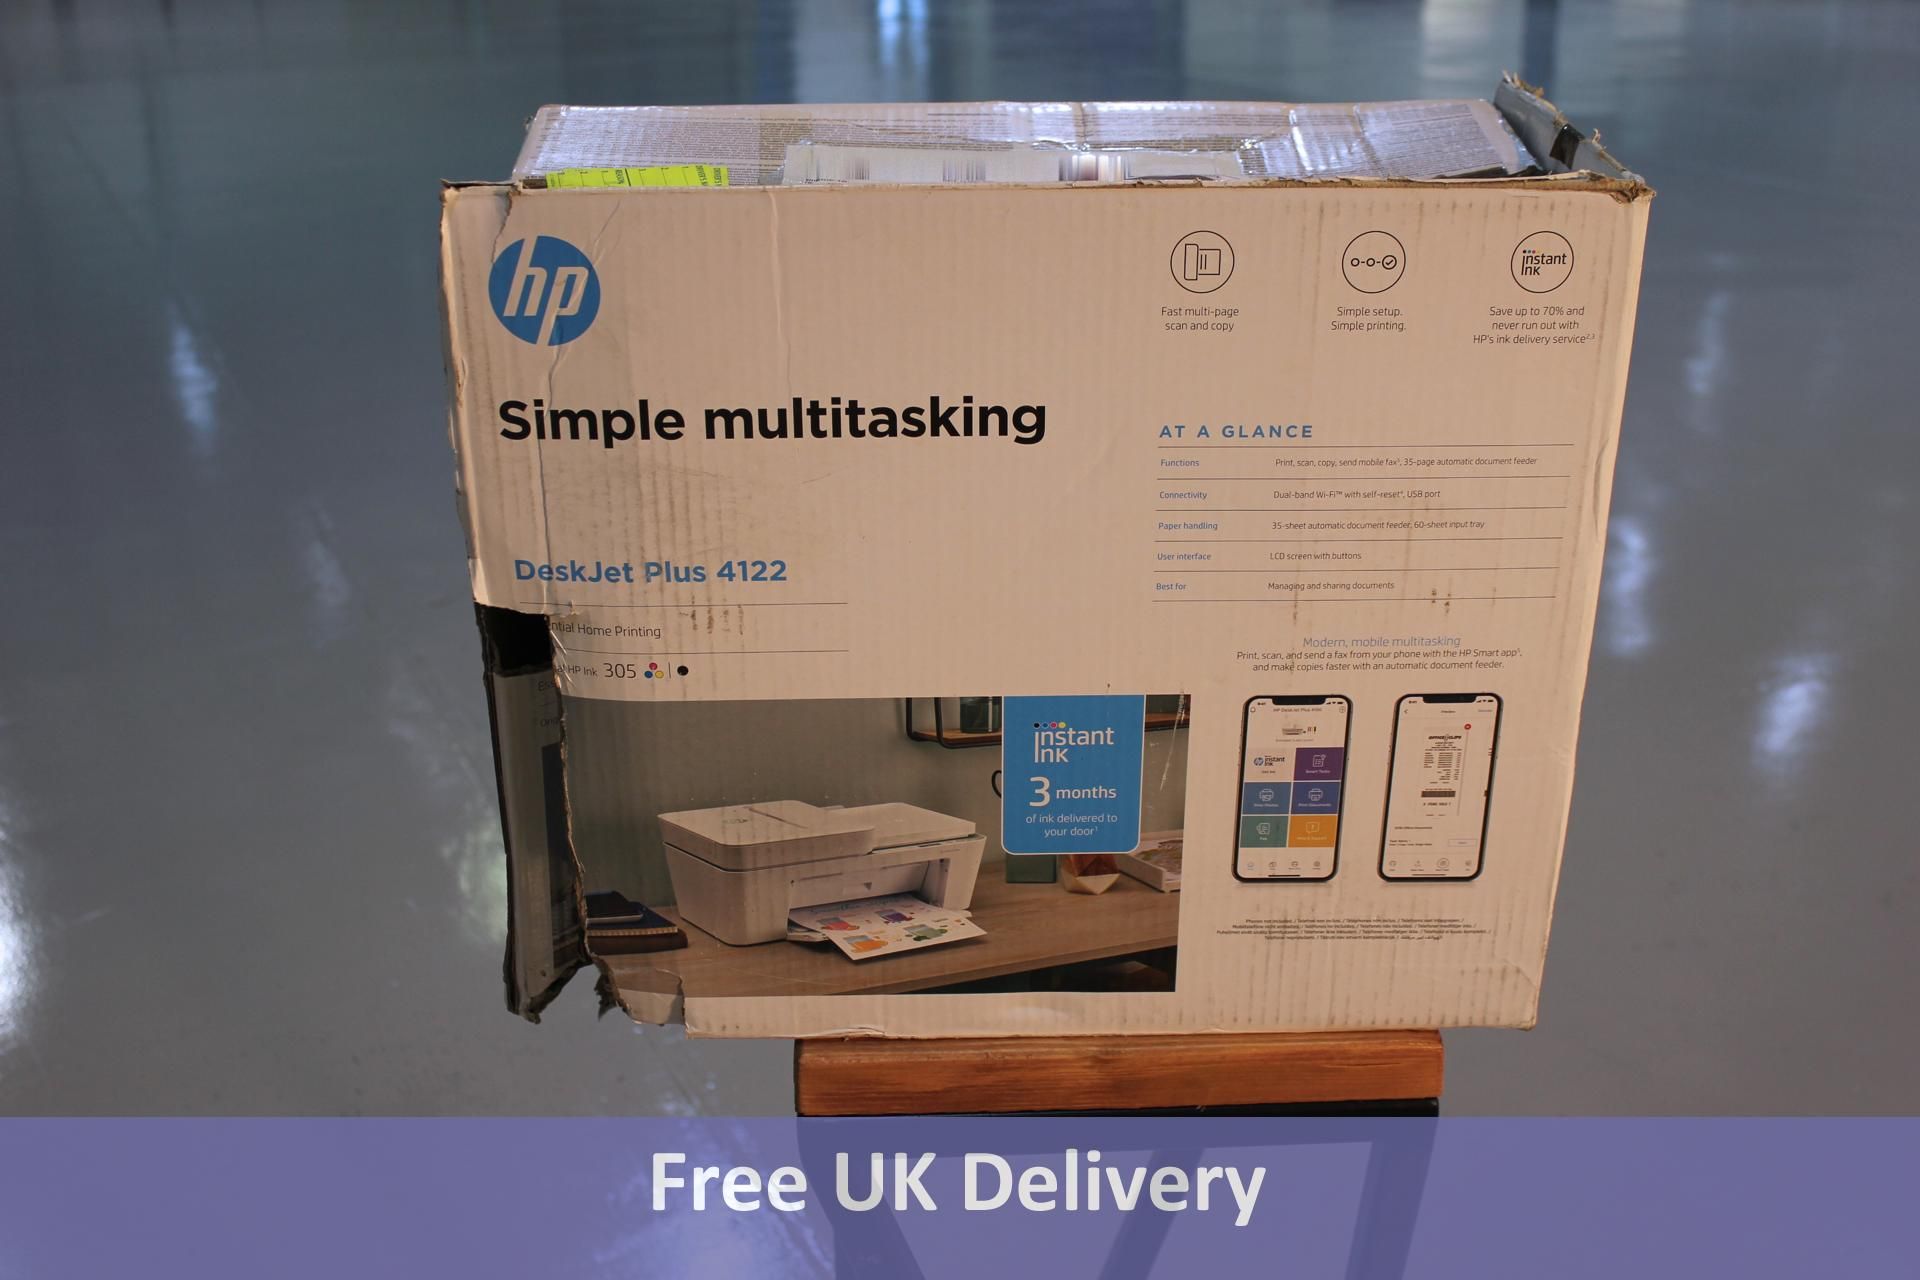 HP Simple Multi-tasking Deskjet Plus 4122 Printer. Used. Box damaged, no plug